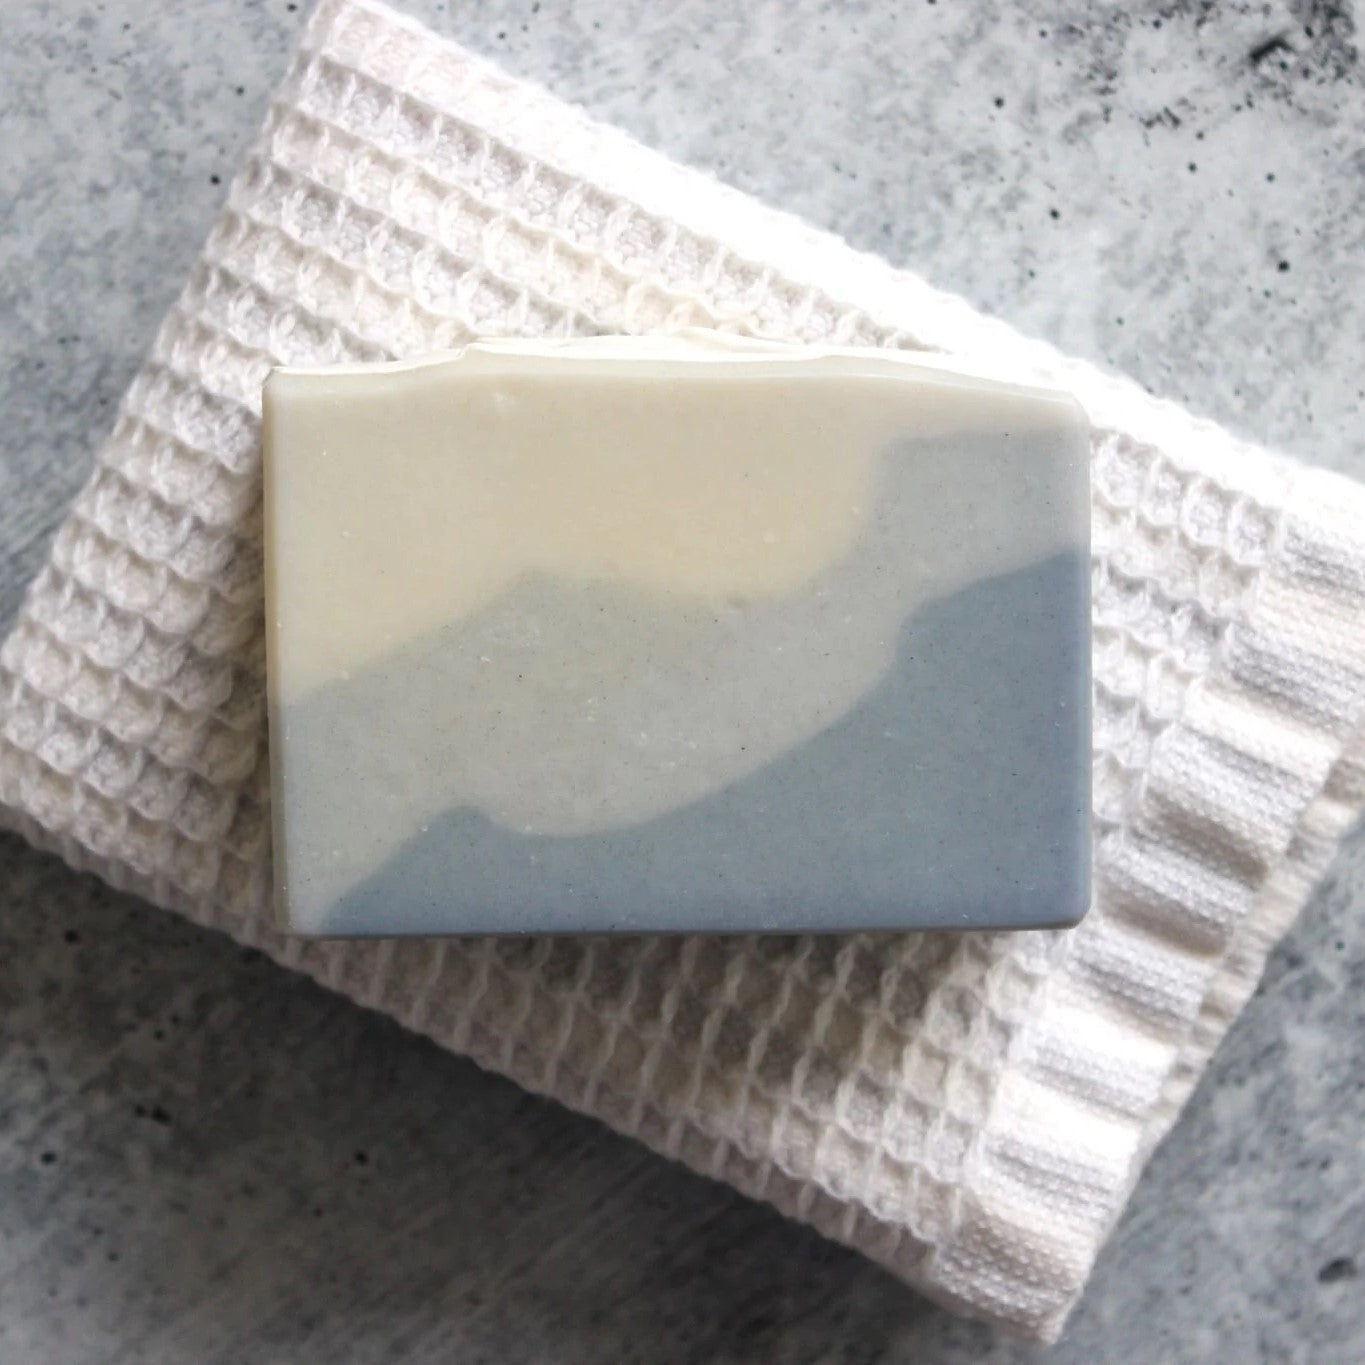 Ocean Goddess - Clay Soap | Kelp Soap | Ocean Soap